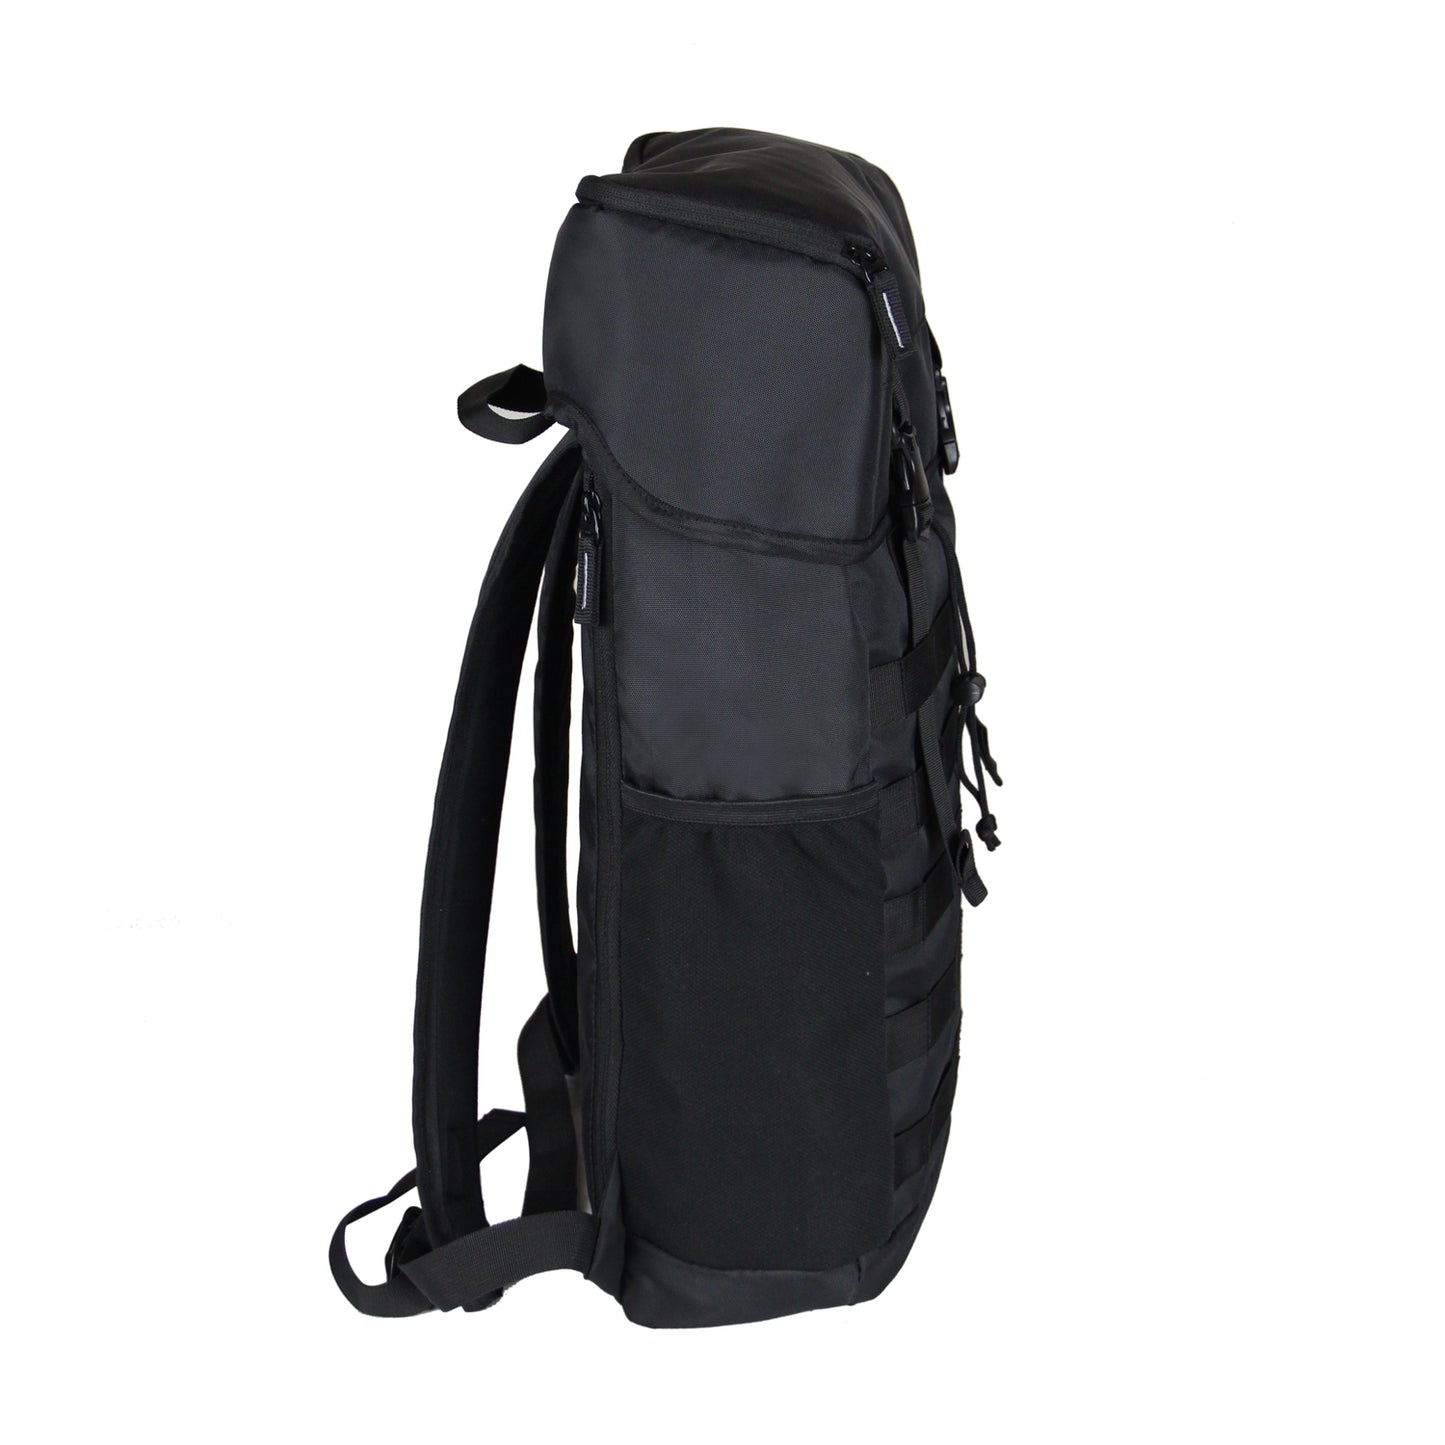 All Black Capacious Backpack